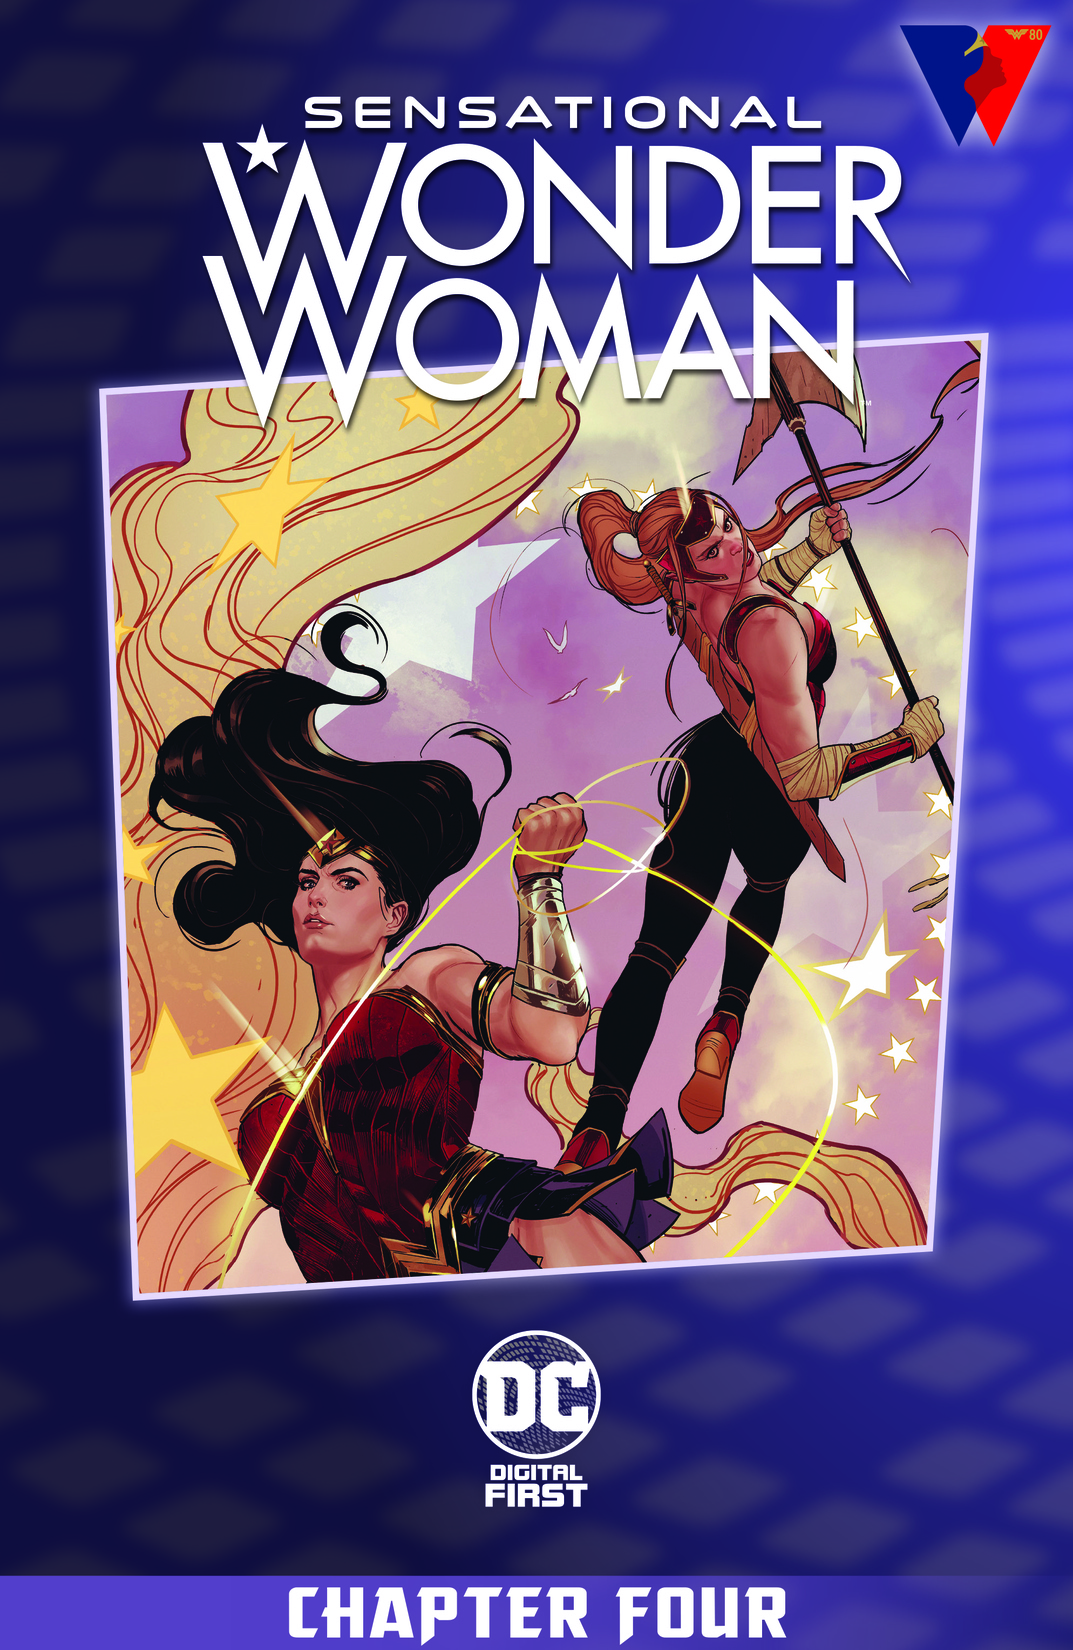 Sensational Wonder Woman #4 preview images